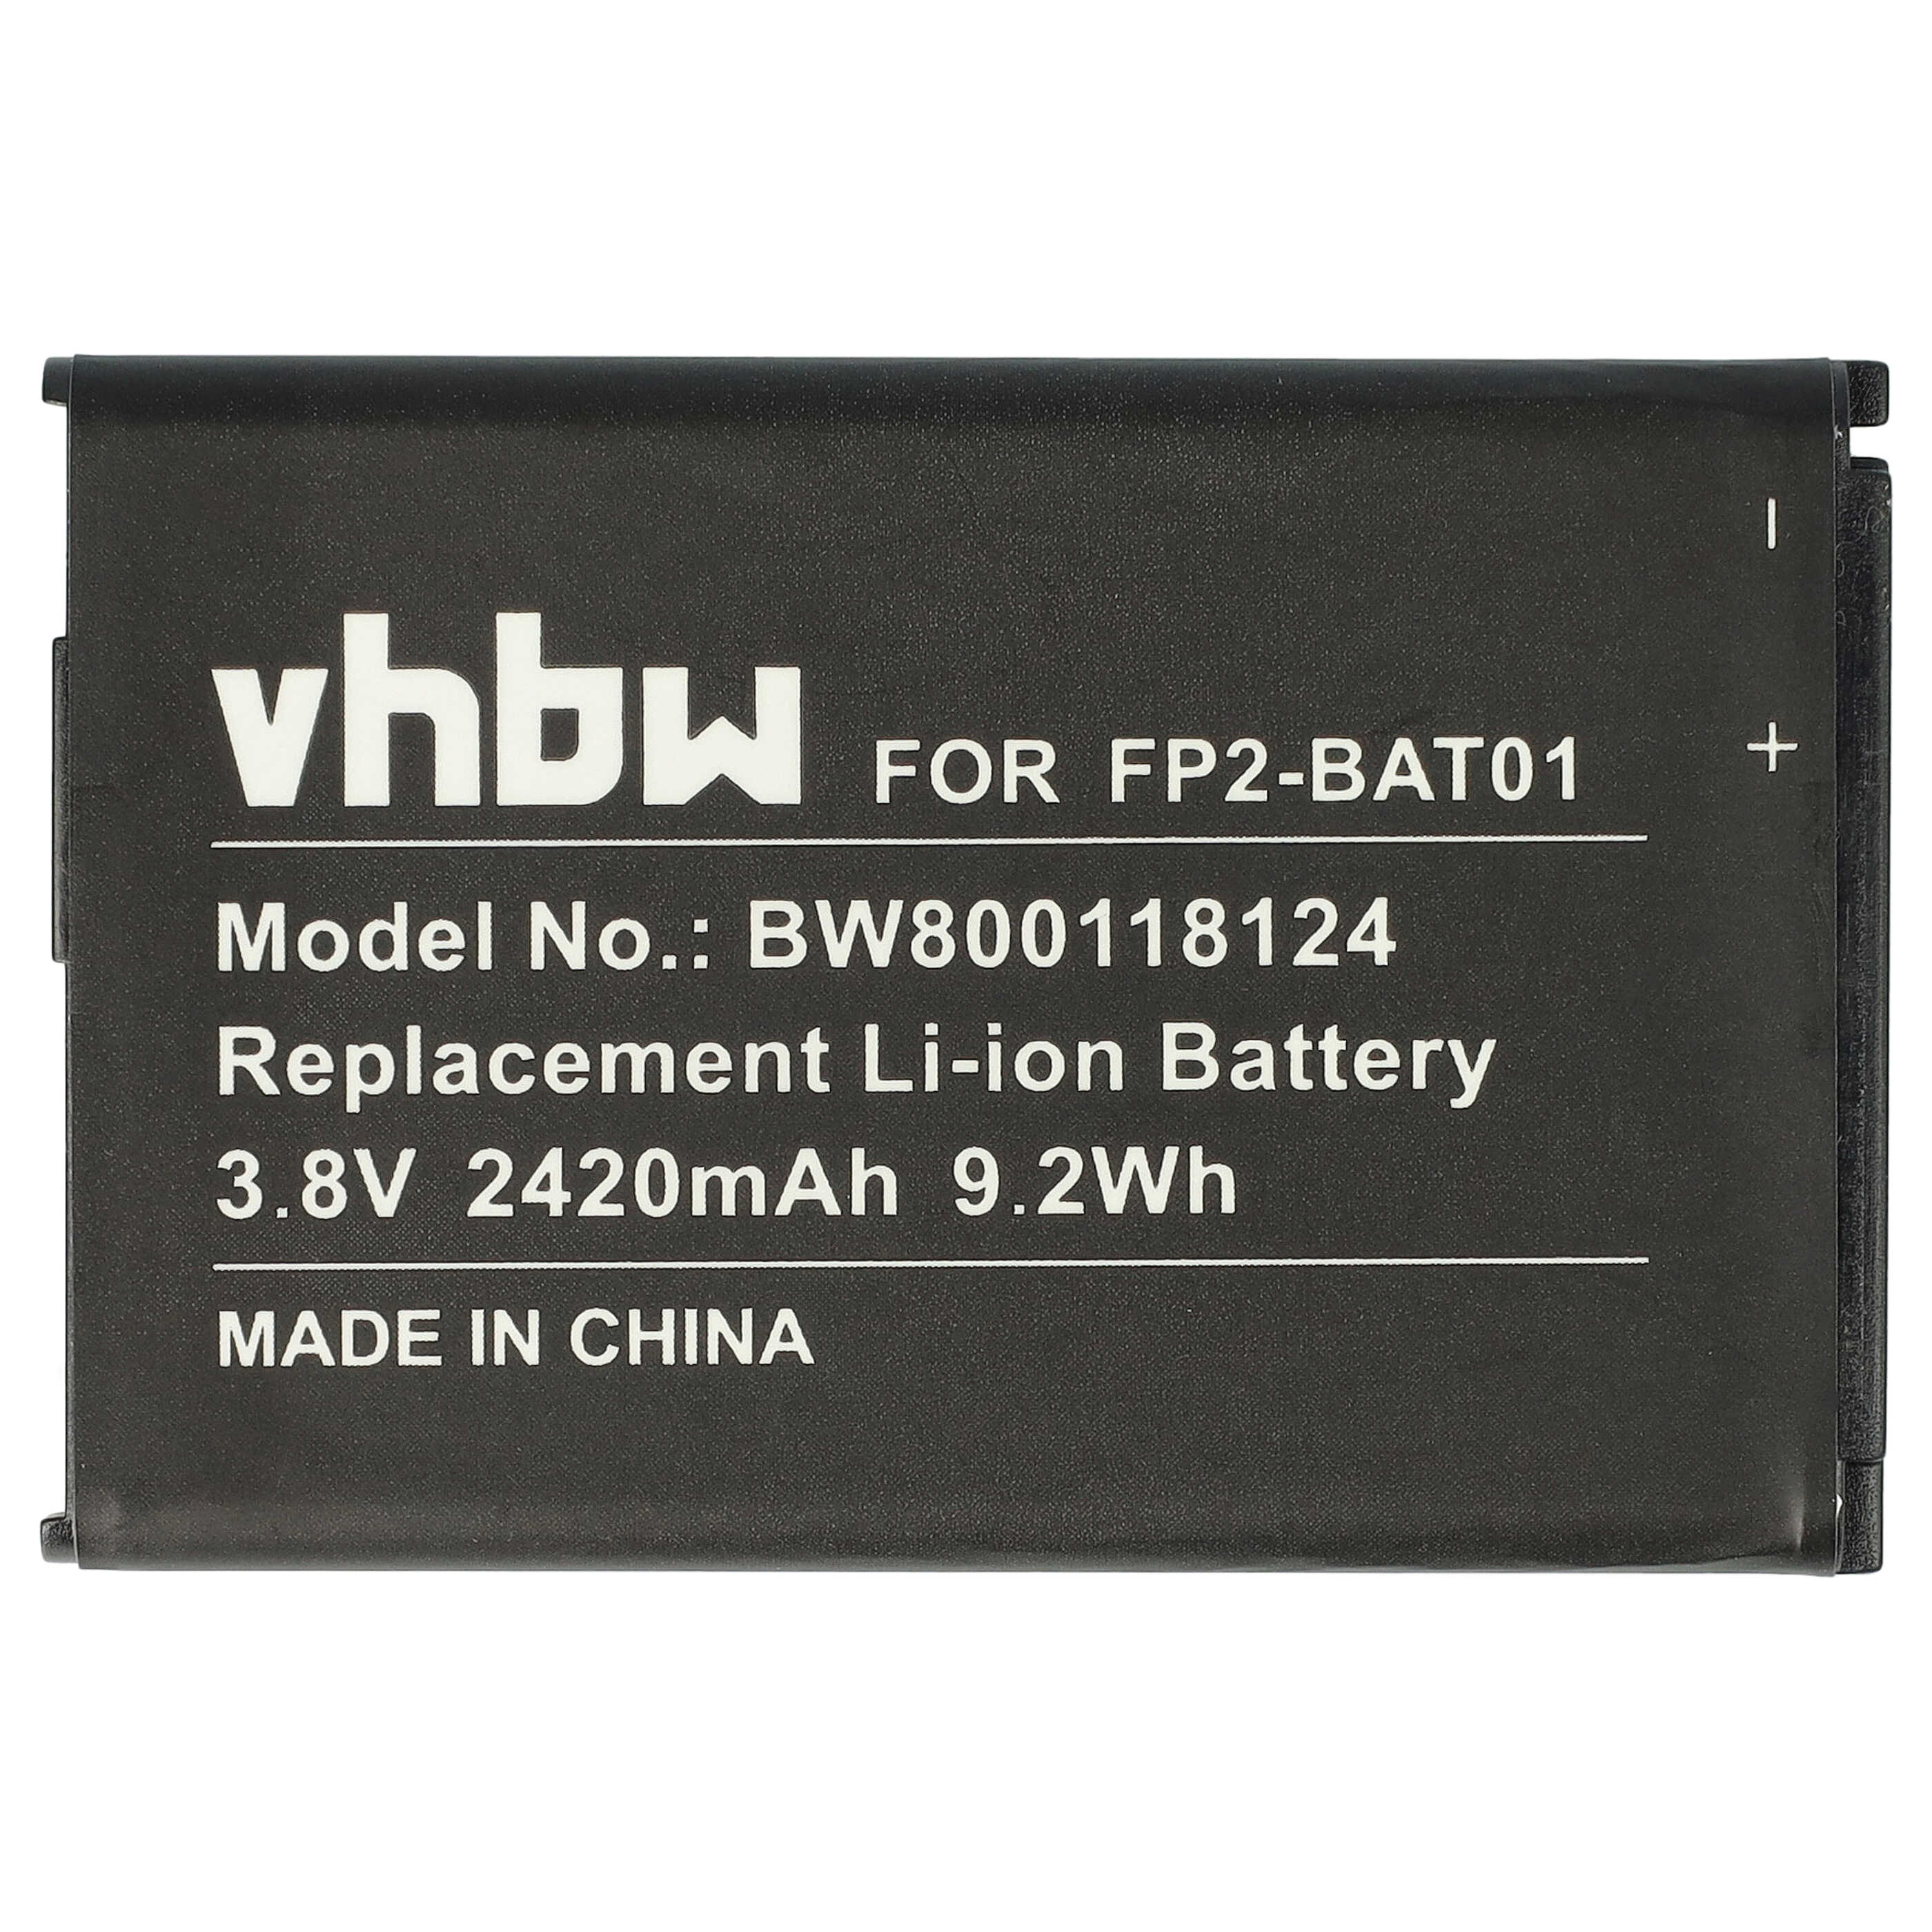 Akumulator Bateria do smartfona komórki zam. Fairphone FP2-BAT01 - 2420mAh, 3,8V, Li-Ion